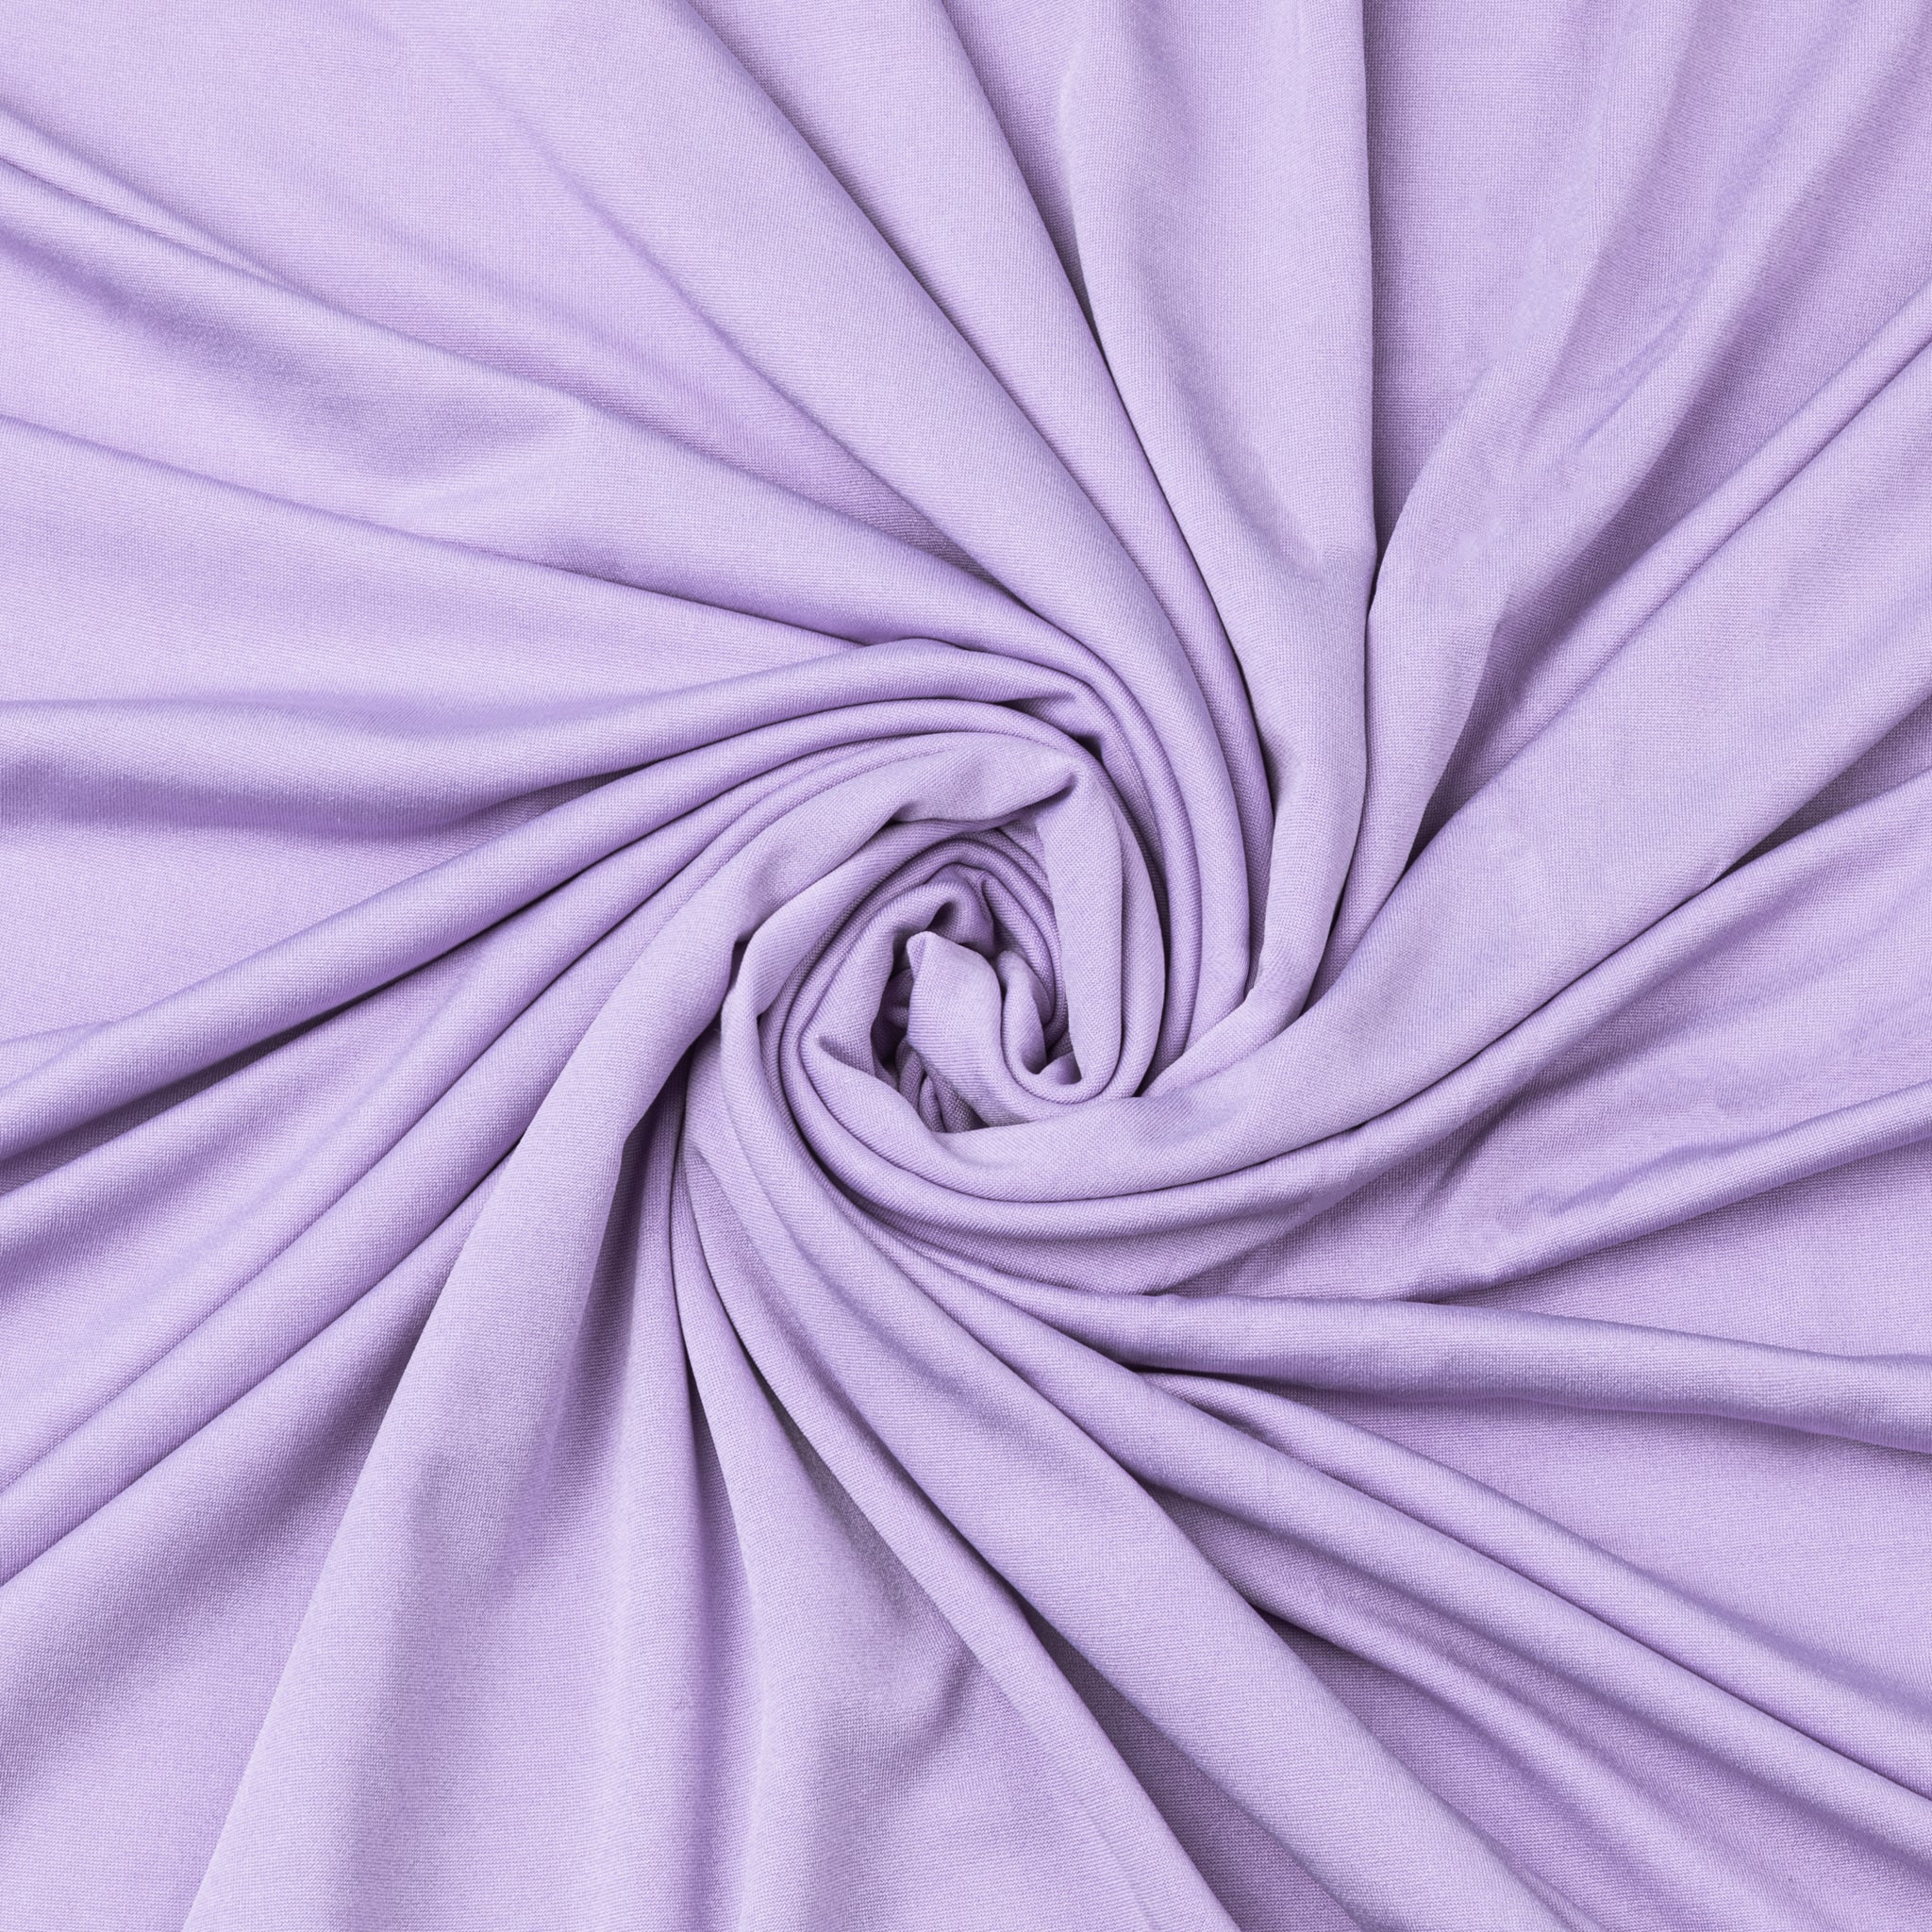 Purple Lavender Textured Cotton Wideback Fabric Per Yard